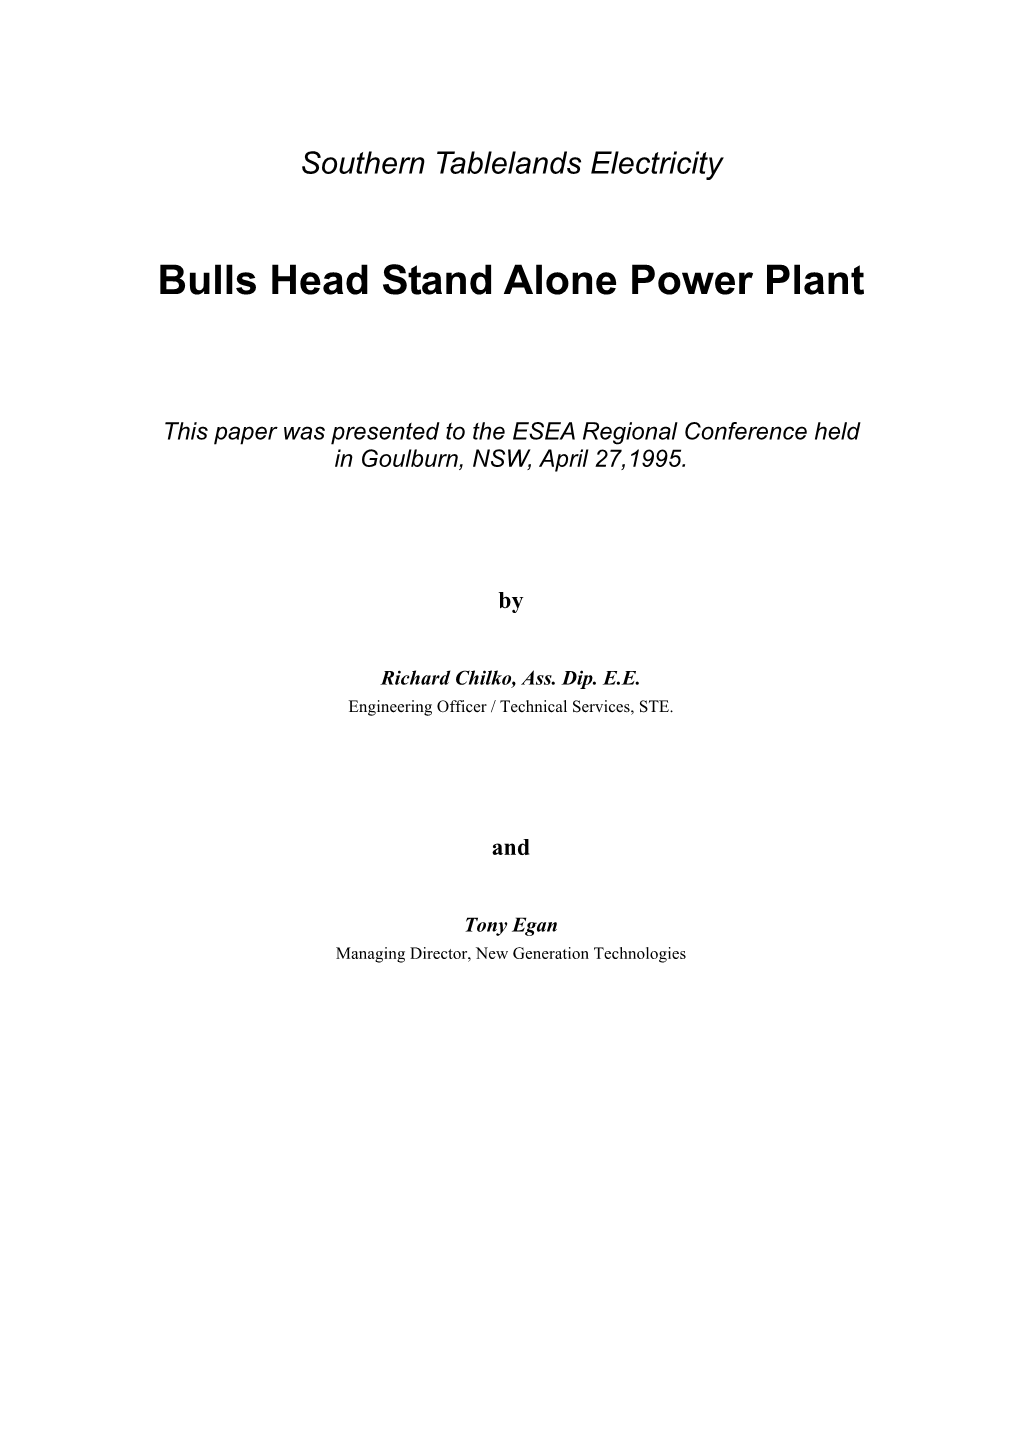 Bulls Head Stand Alone Power Plant